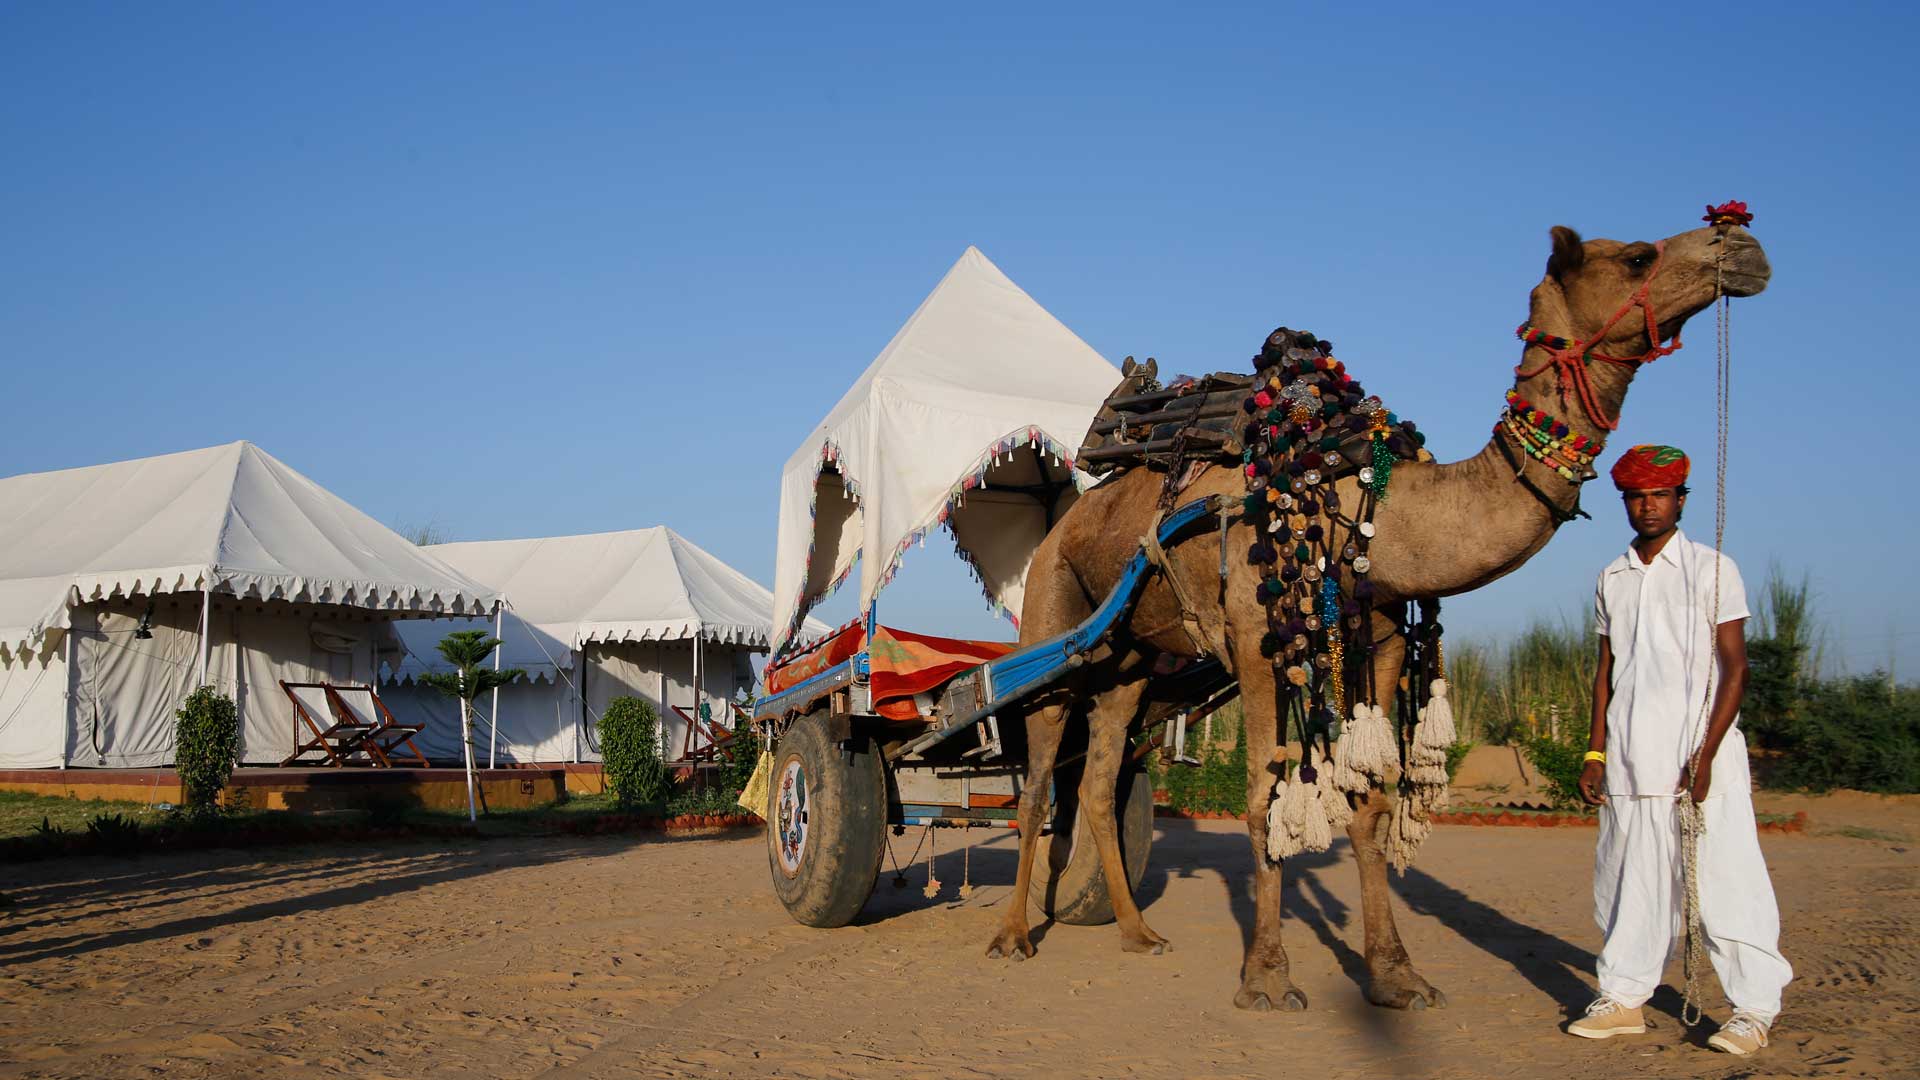 camp pushkar,desert camp,tent pushkar,fair accomodation, jeep safari, camel safari, desert camp, Pushkar fair, pushkar tent